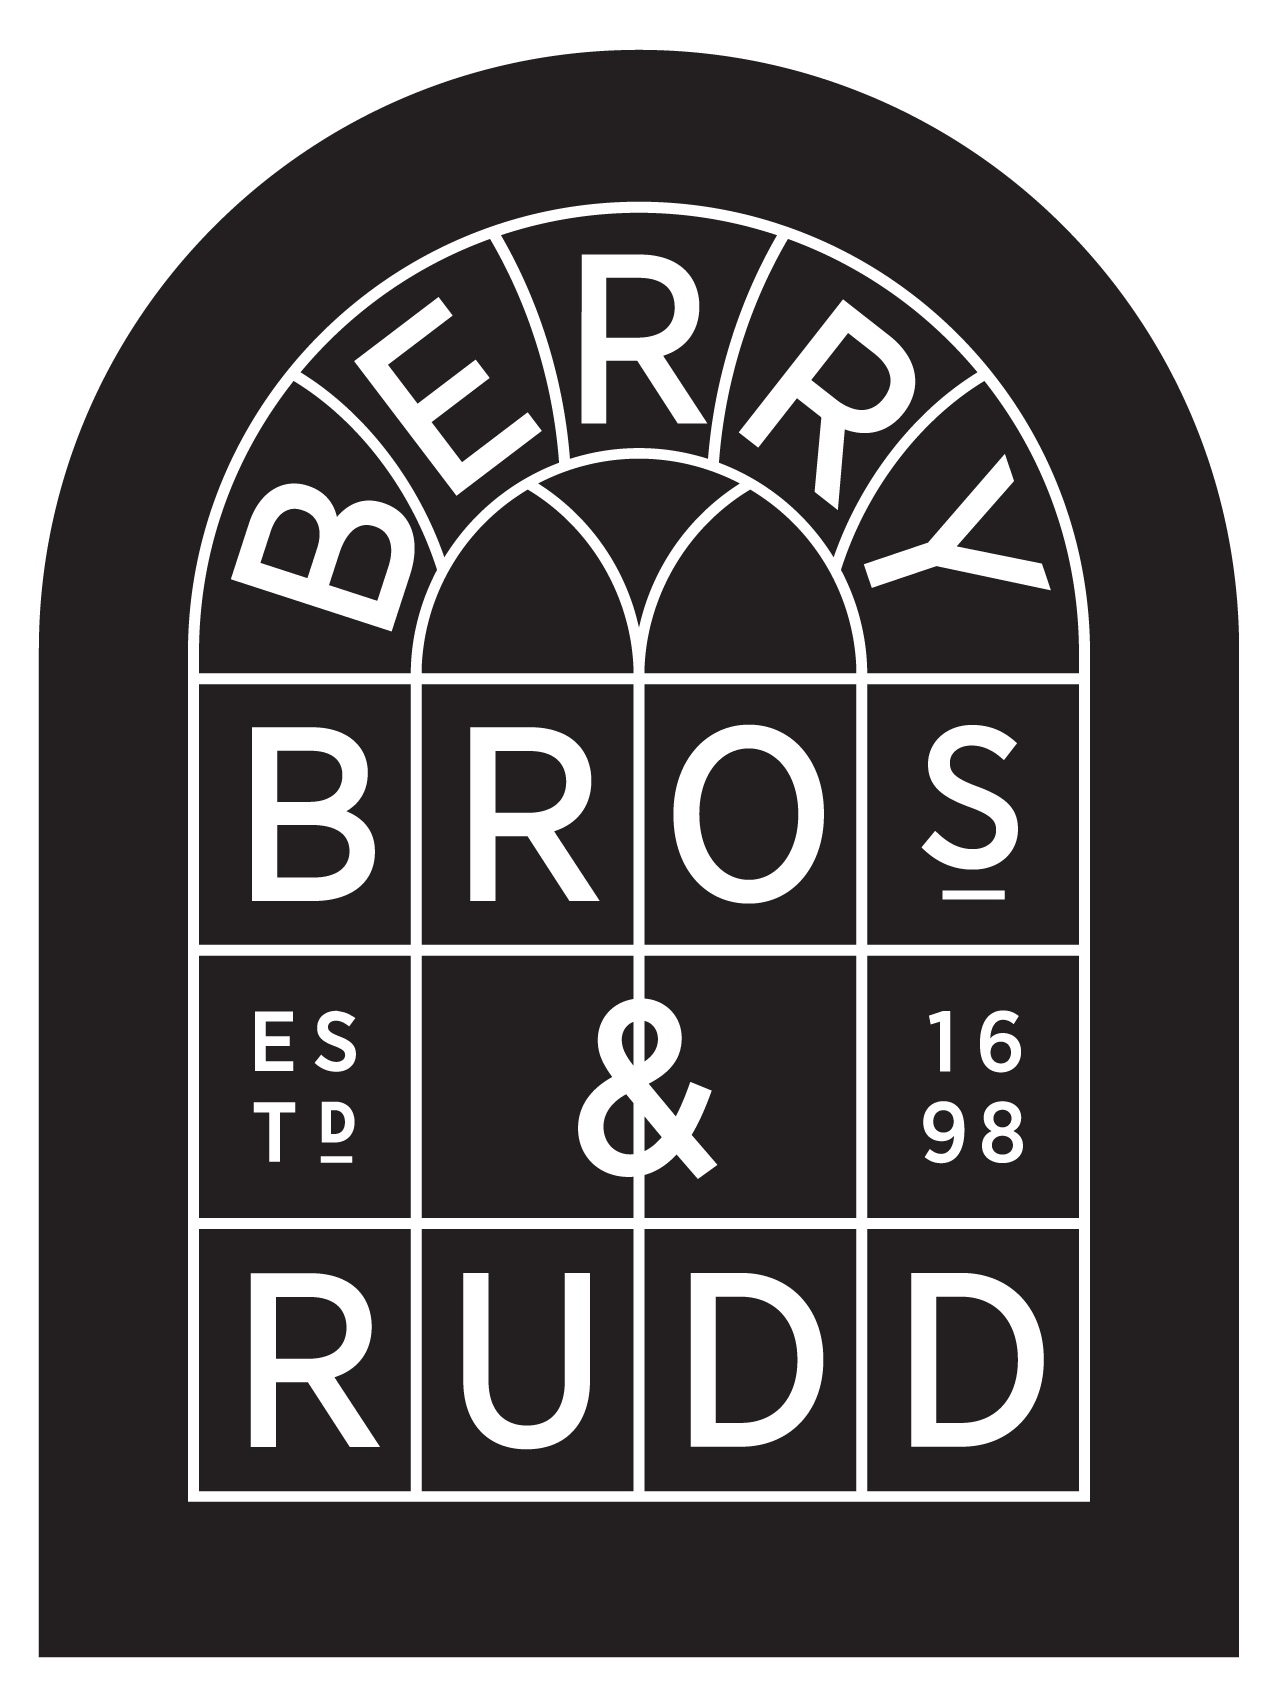 Berry Bros. & Rudd